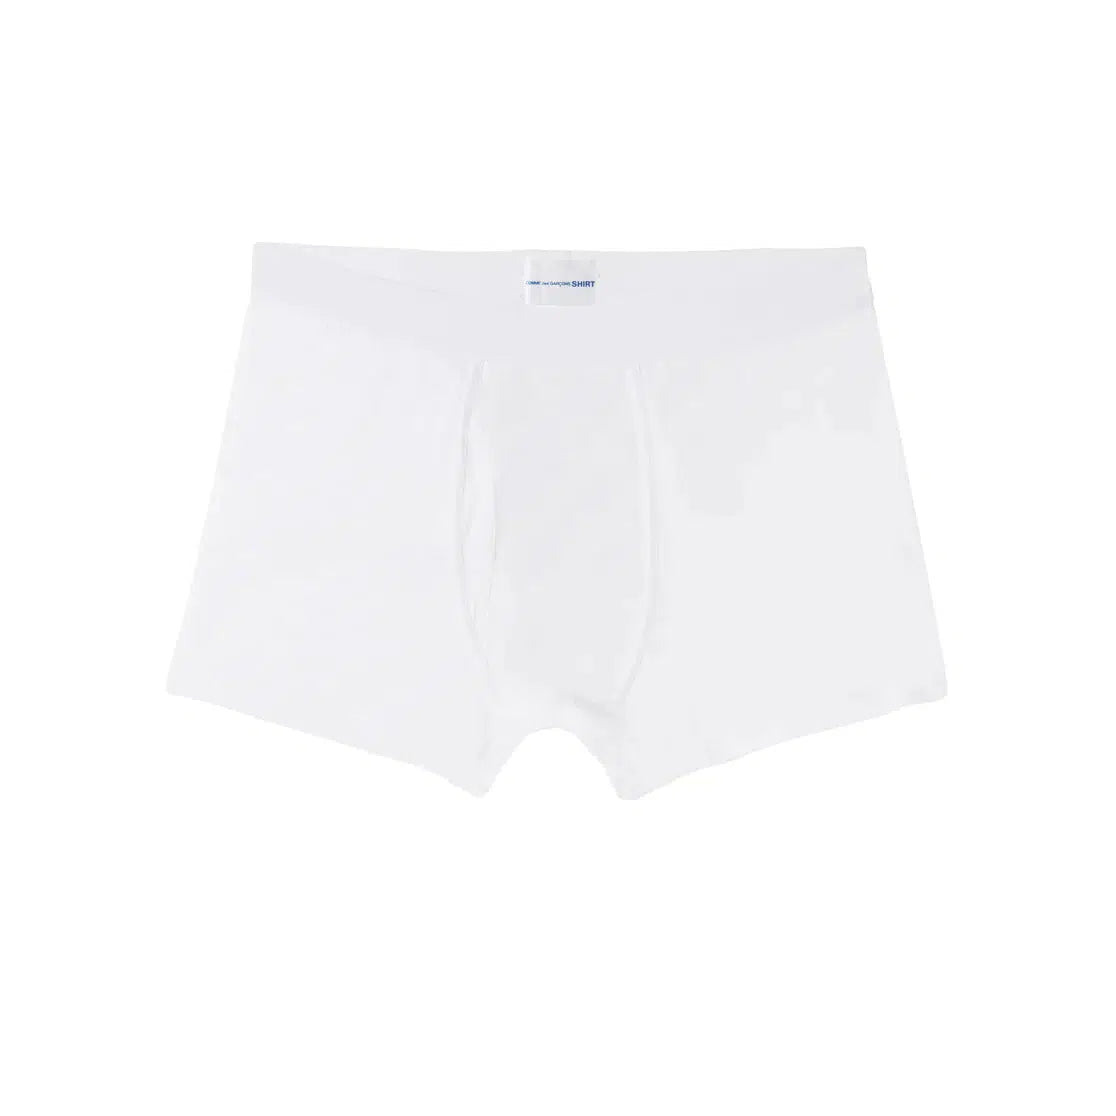 Comme des Garçons Shirt x Sunspel Boxers - White-Comme des Garçons Shirt-W2 Store